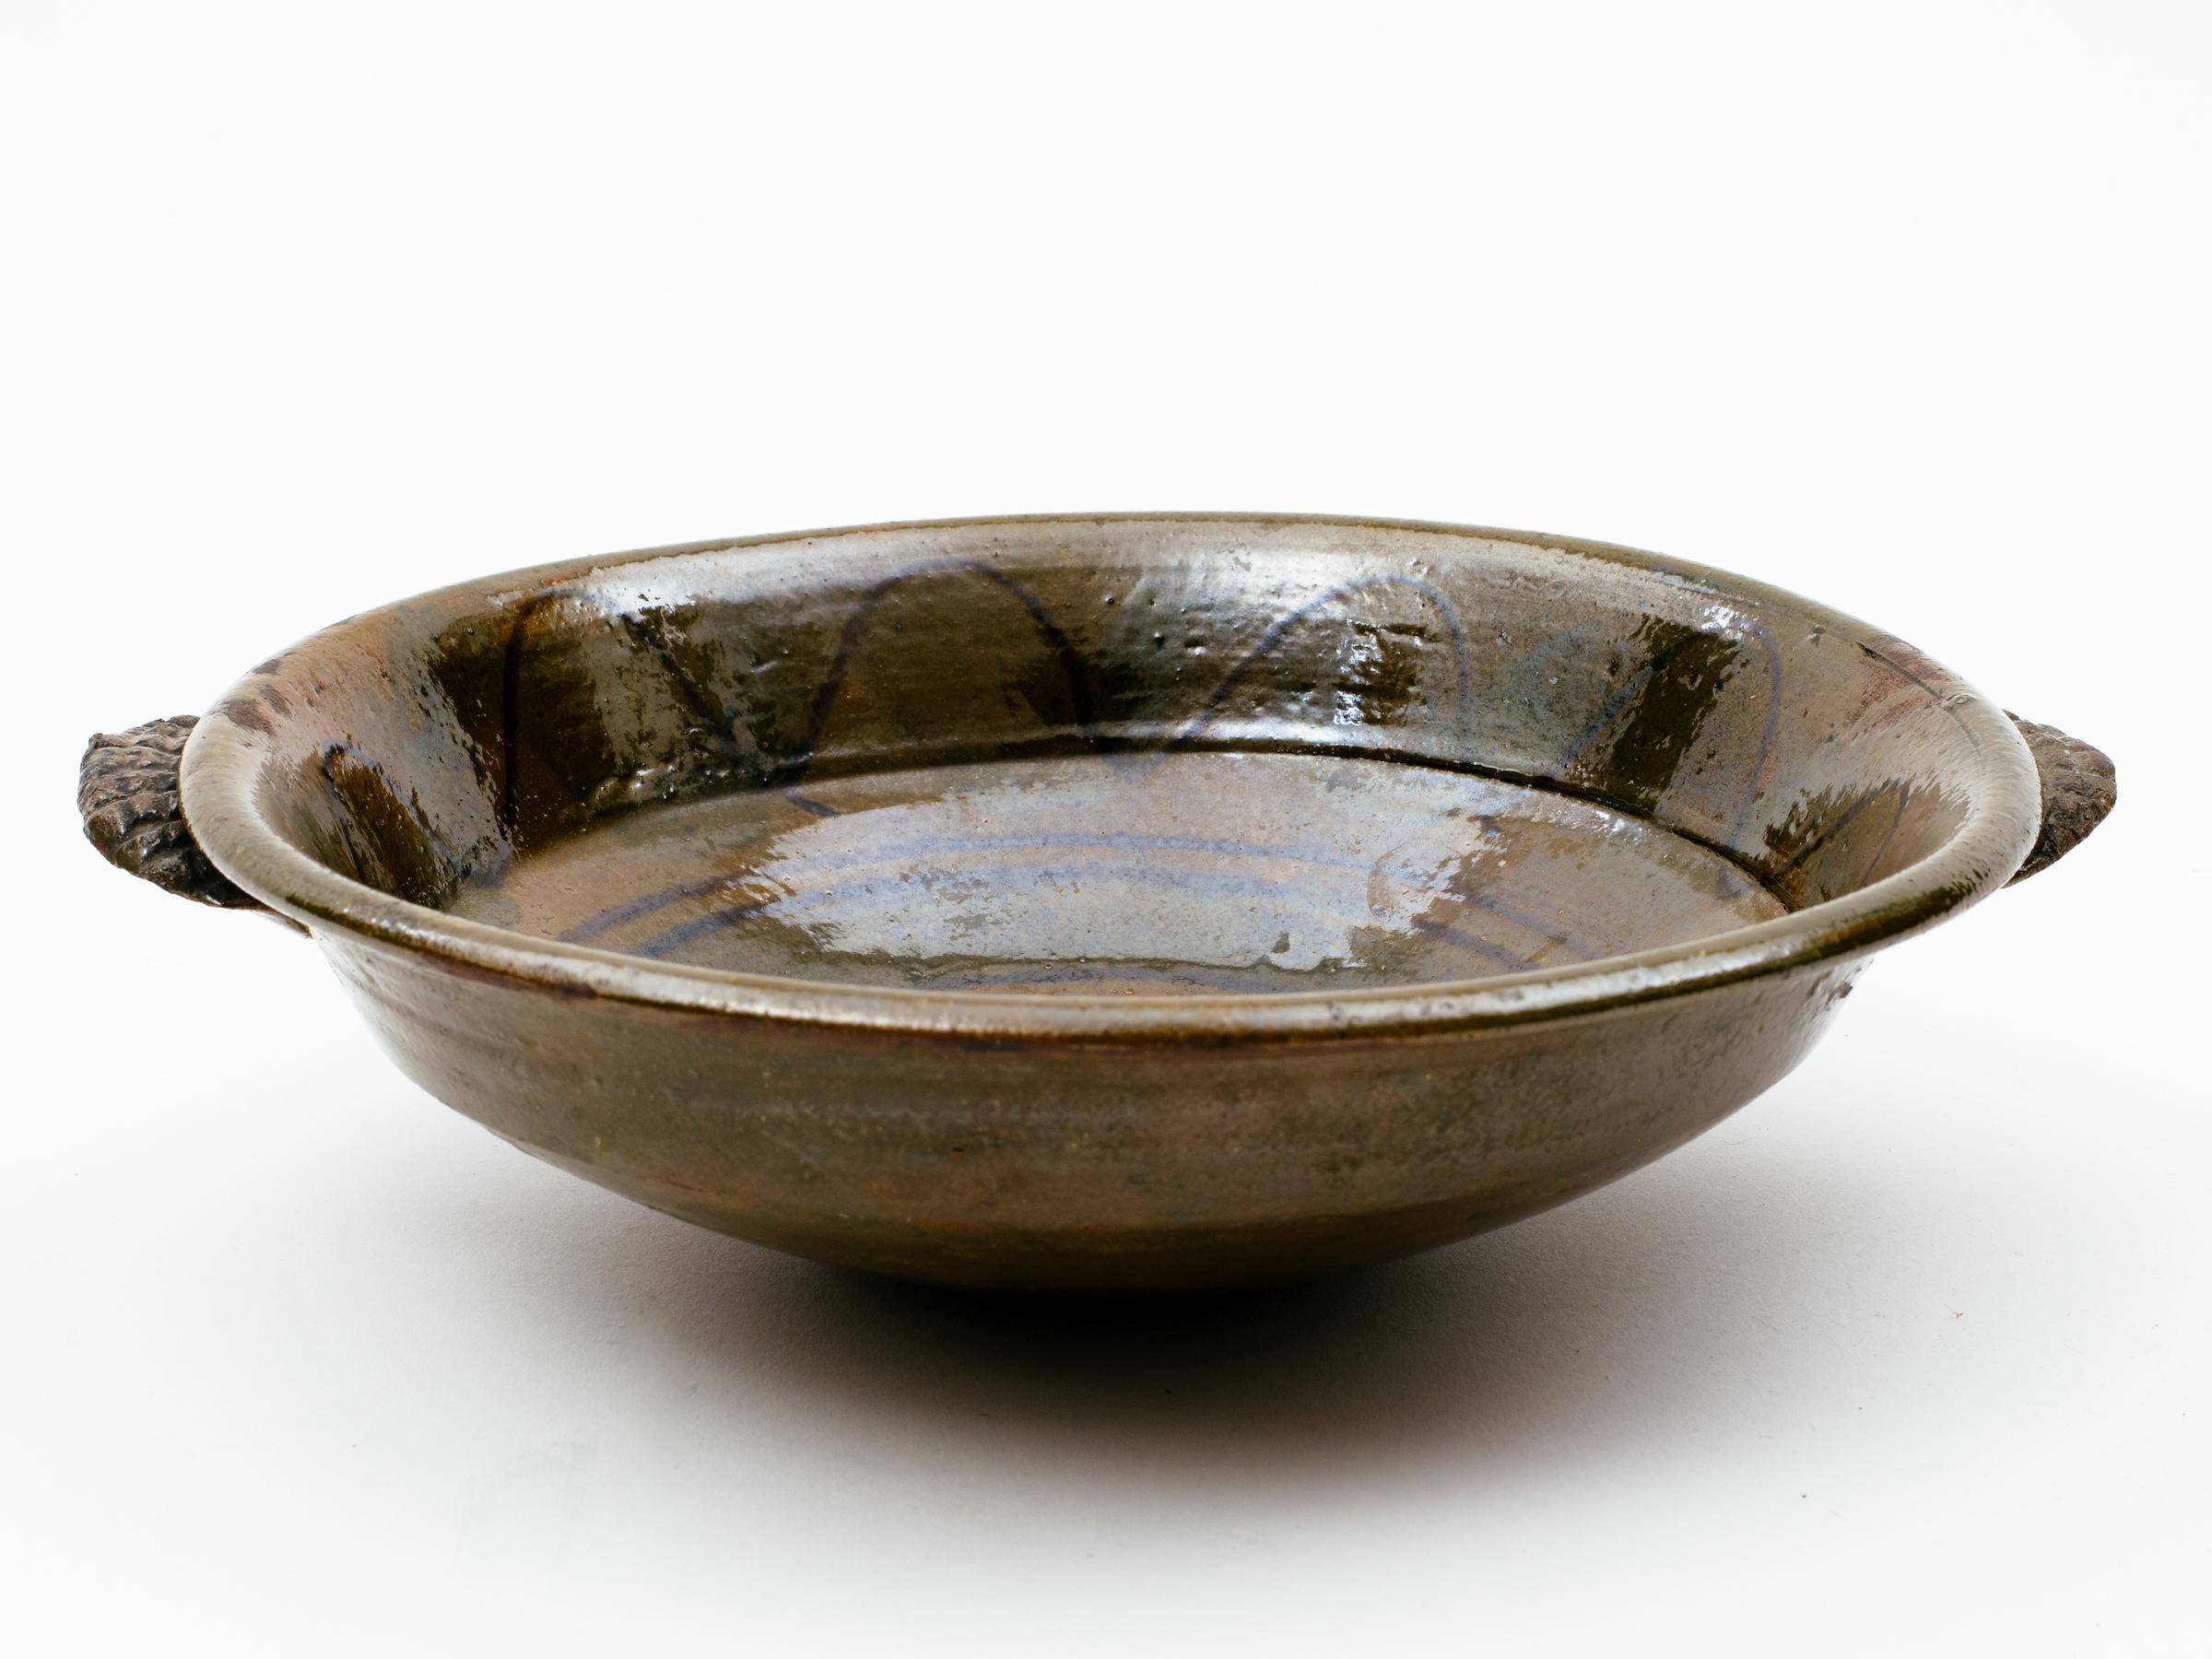 Spanish Colonial Majolica glaze ceramic ceremonial bowl, circa late 18th-early 19th century, Guatemala Highlands.